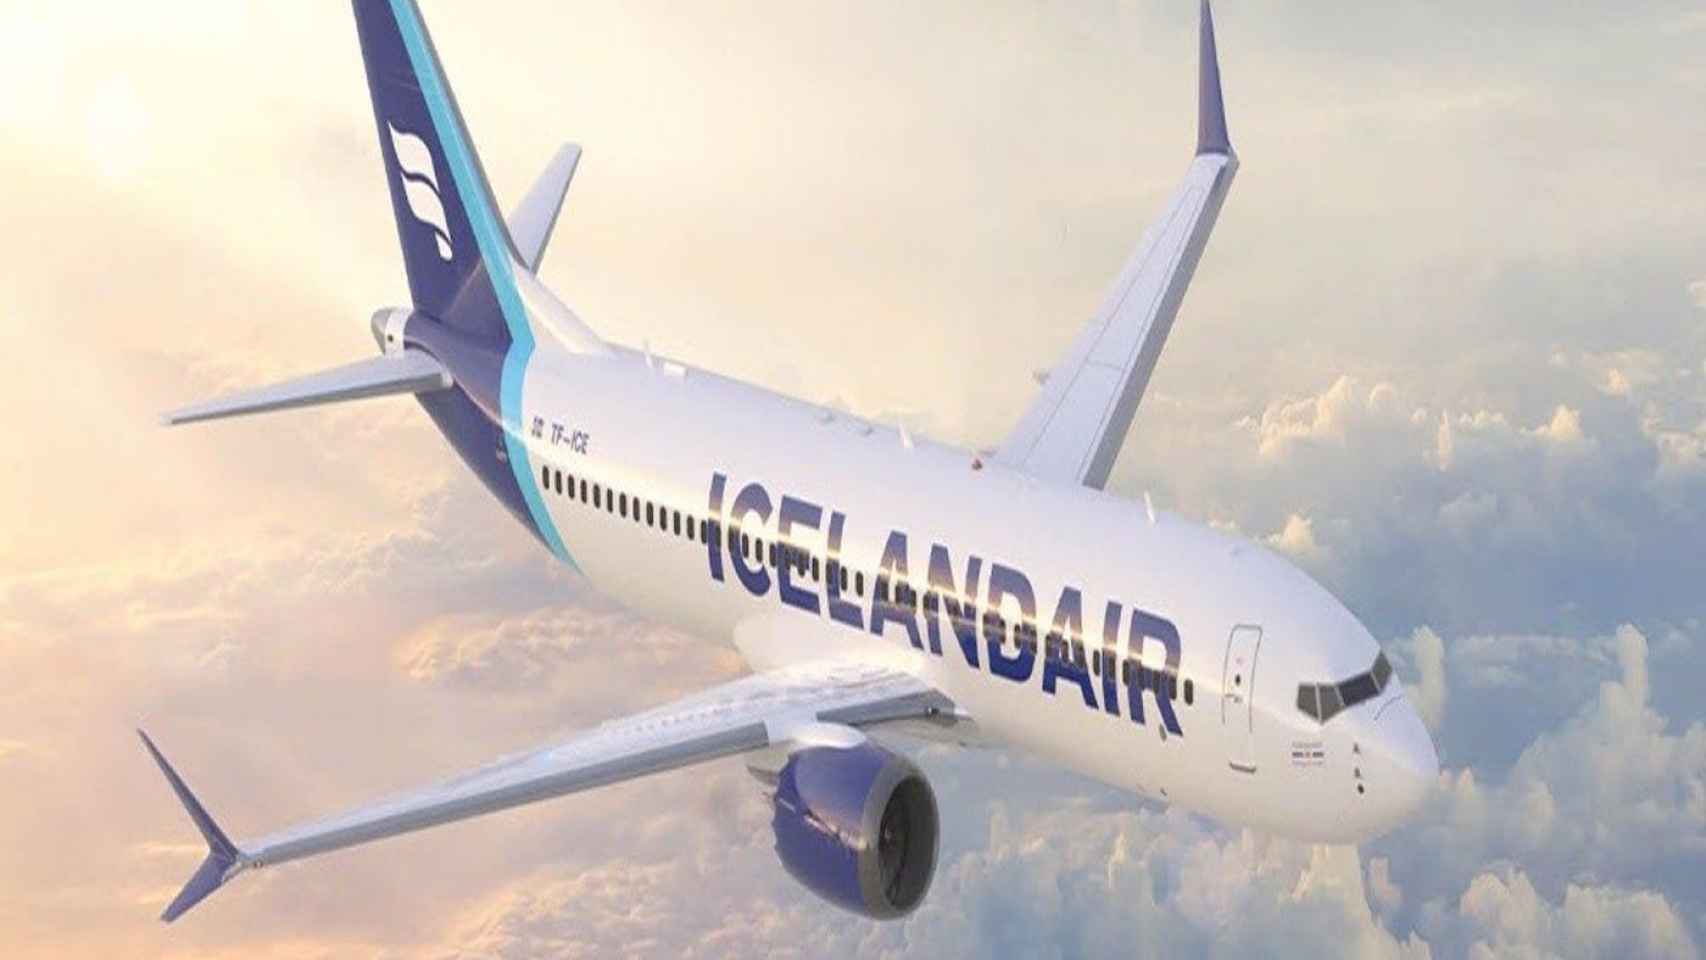 Avión perteneciente a la aerolínia Icelandair / ICELANDAIR